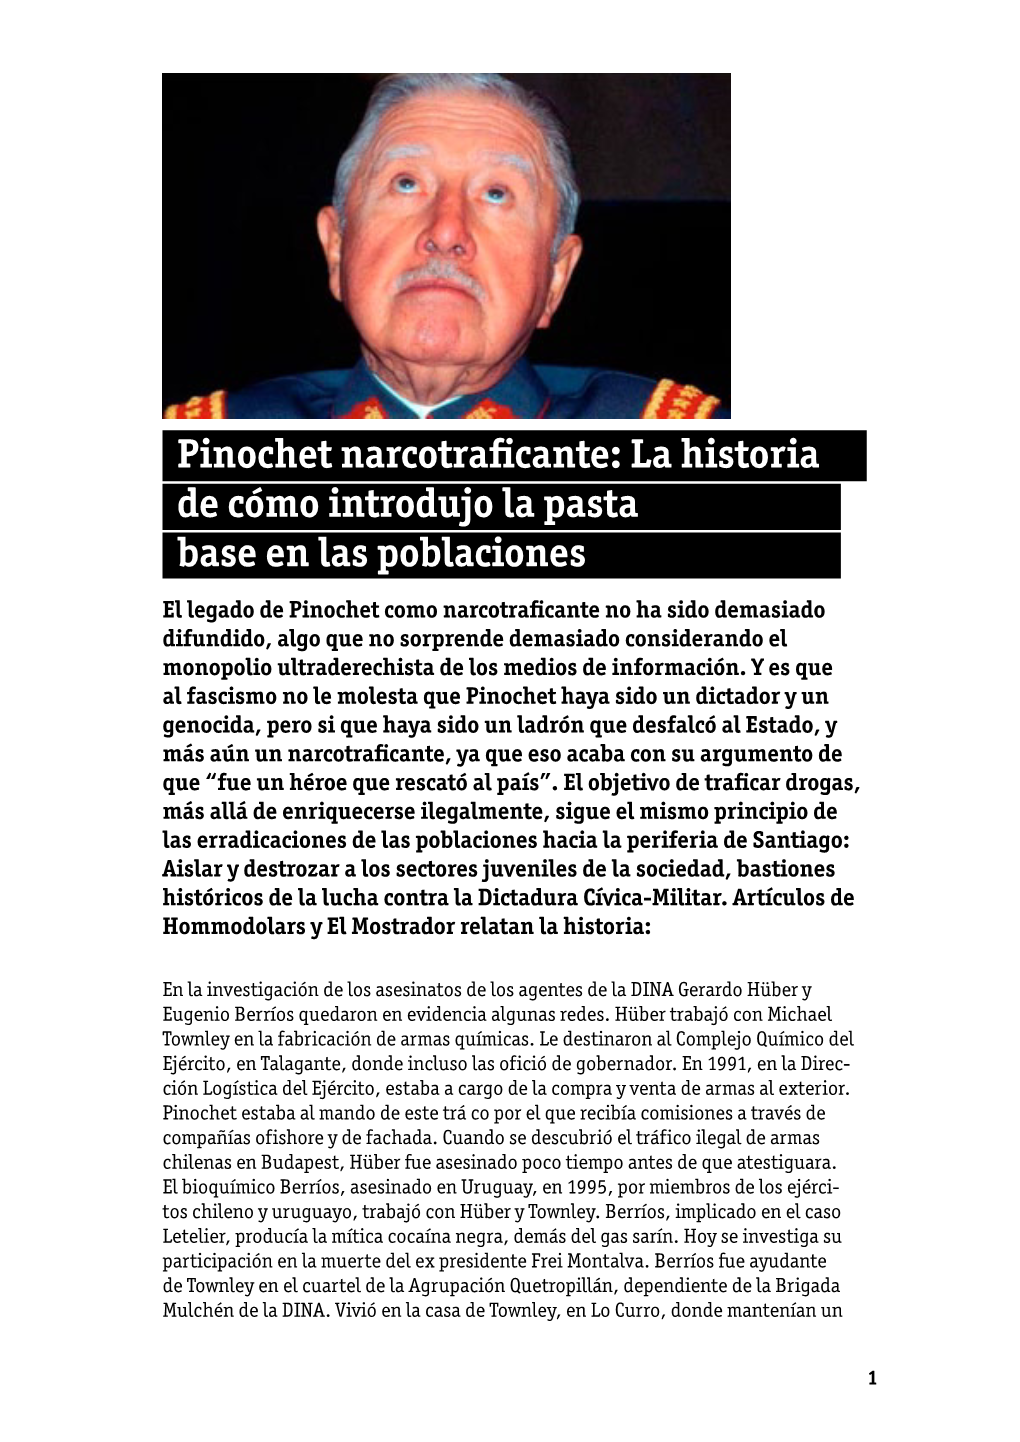 Pinochet Narcotraficante